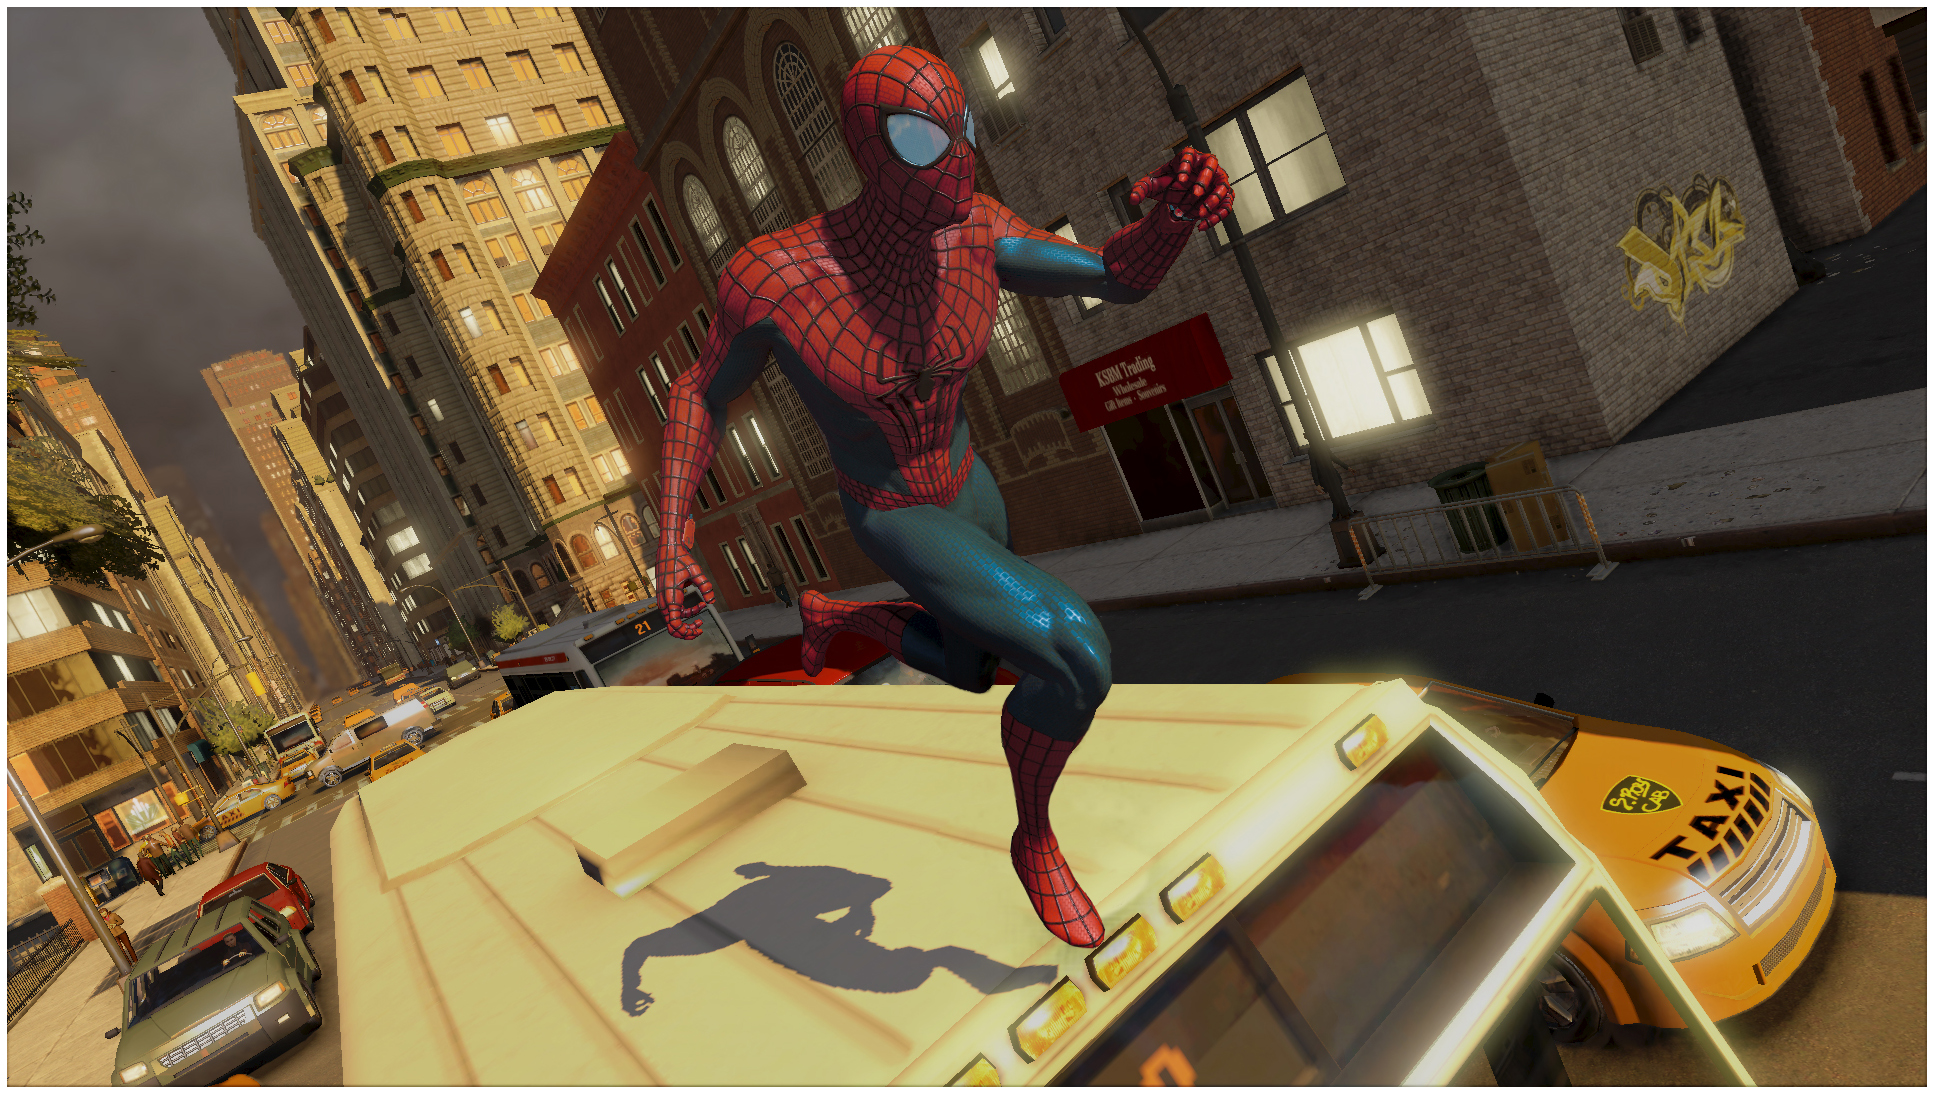 Игры 2 подросток. The amazing Spider-man 2 игра. Амазинг Спайдермен 2 игра. The amazing Spider-man (игра, 2012). Человек паук 2 игра 2014.